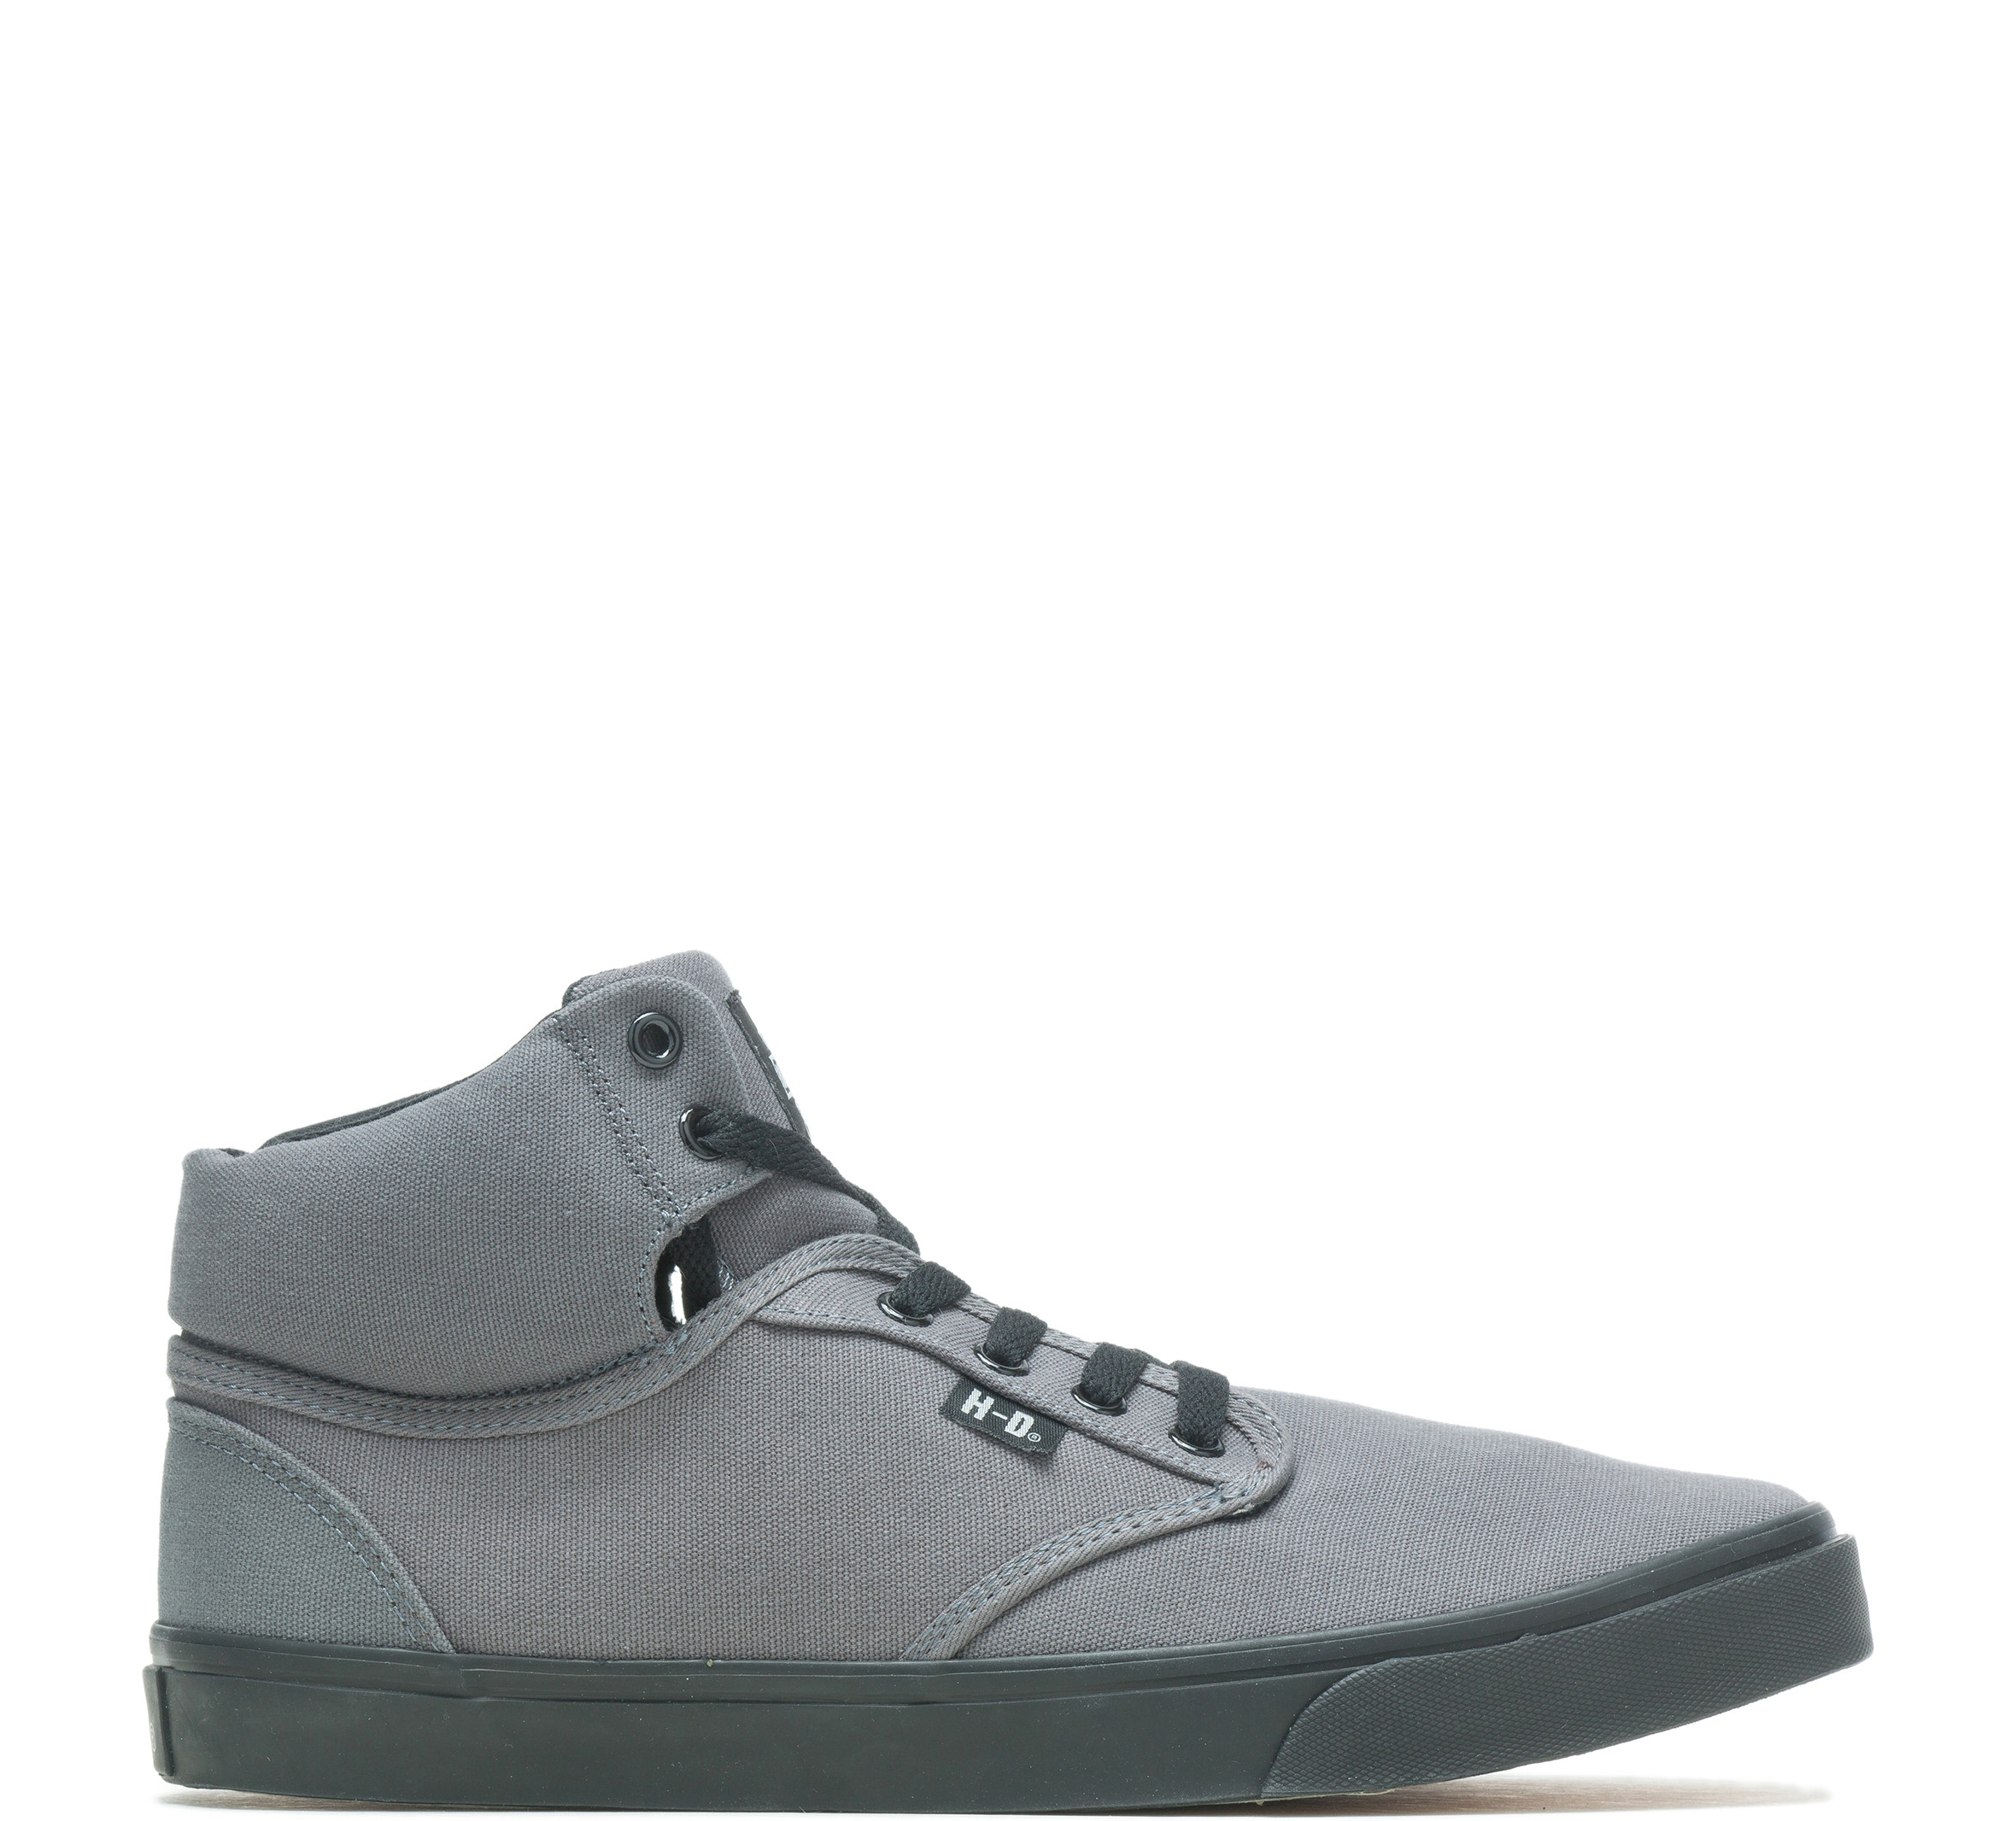 Vintage 2002 Nike Air Force II Hi White Columbia Blue sz 7.5 men leather  shoes.